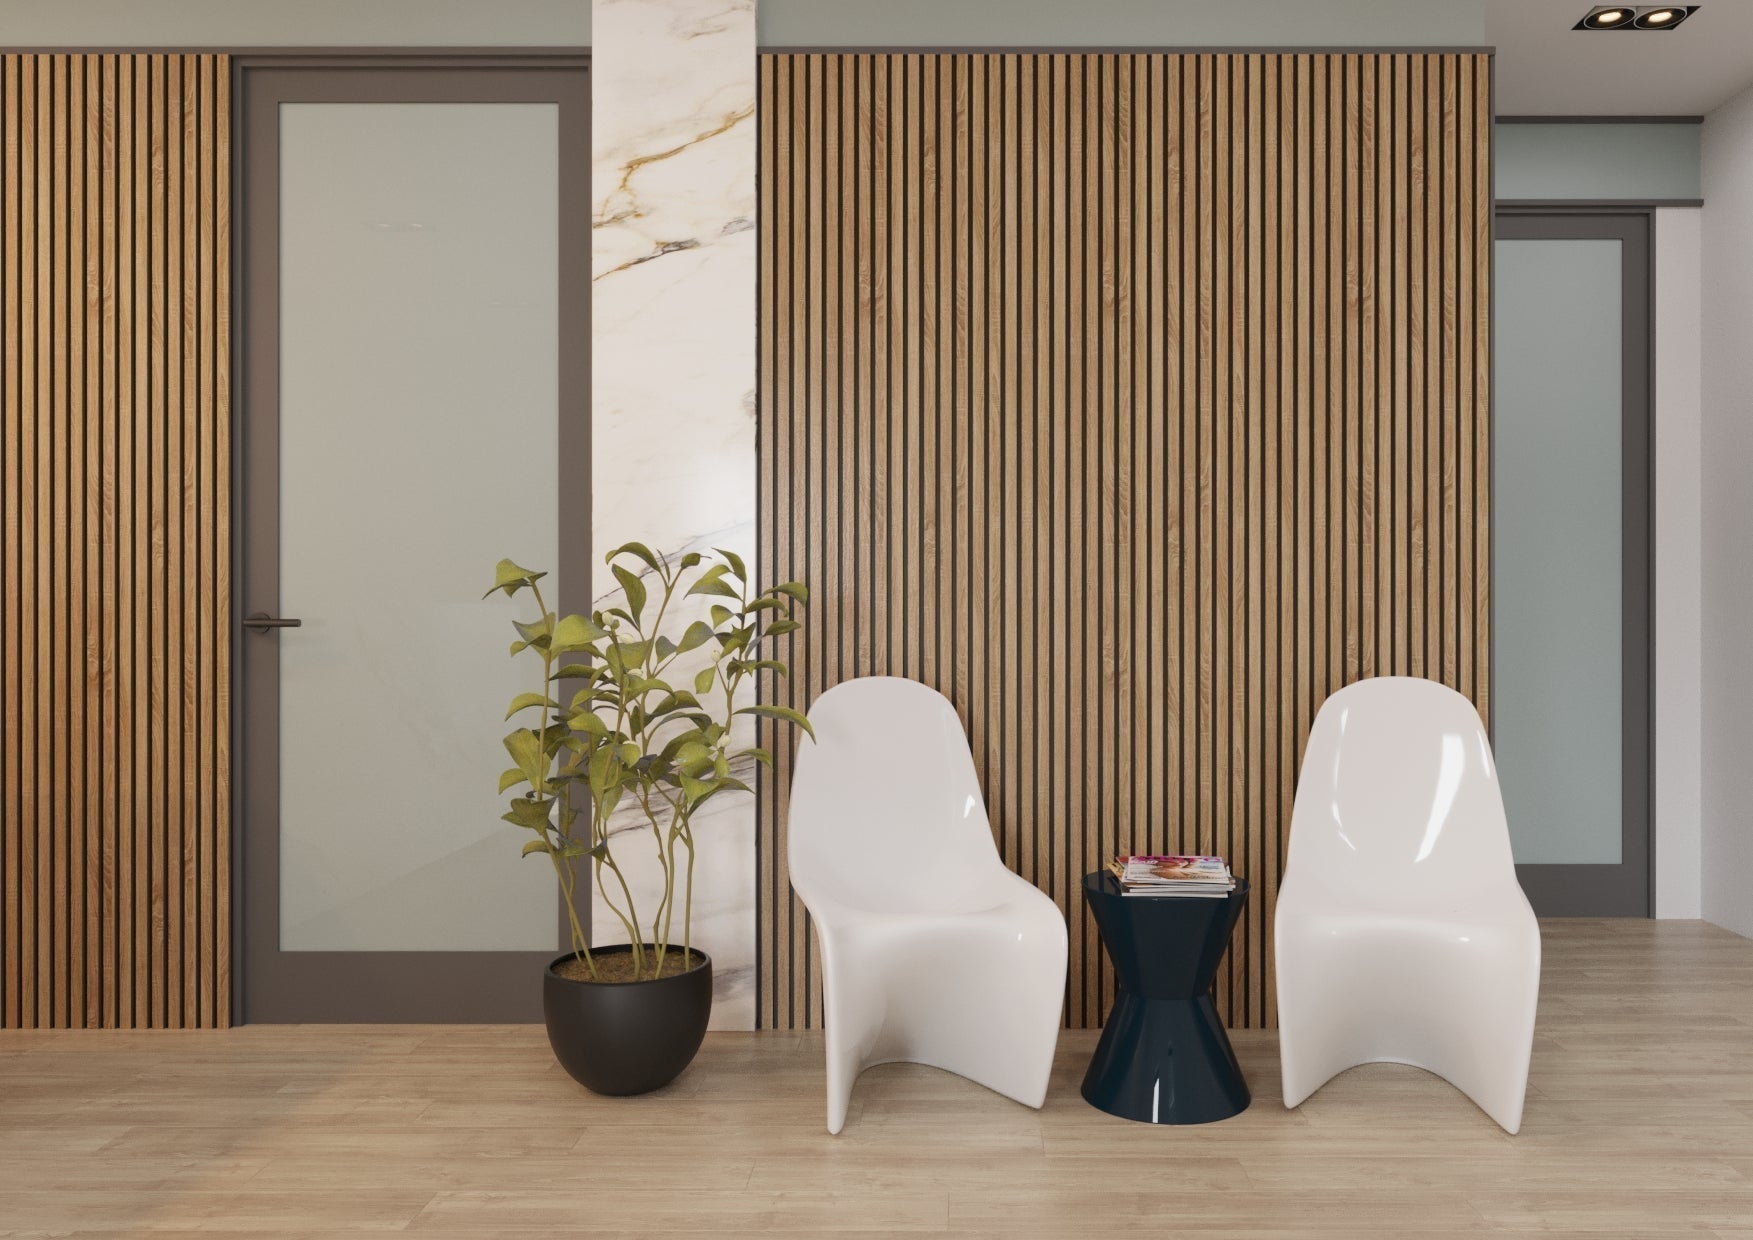 Natural Oak - Black Acoustic Slat Wood Panel 280 x 60 - Slats acoustic 3D Panels | DecorMania